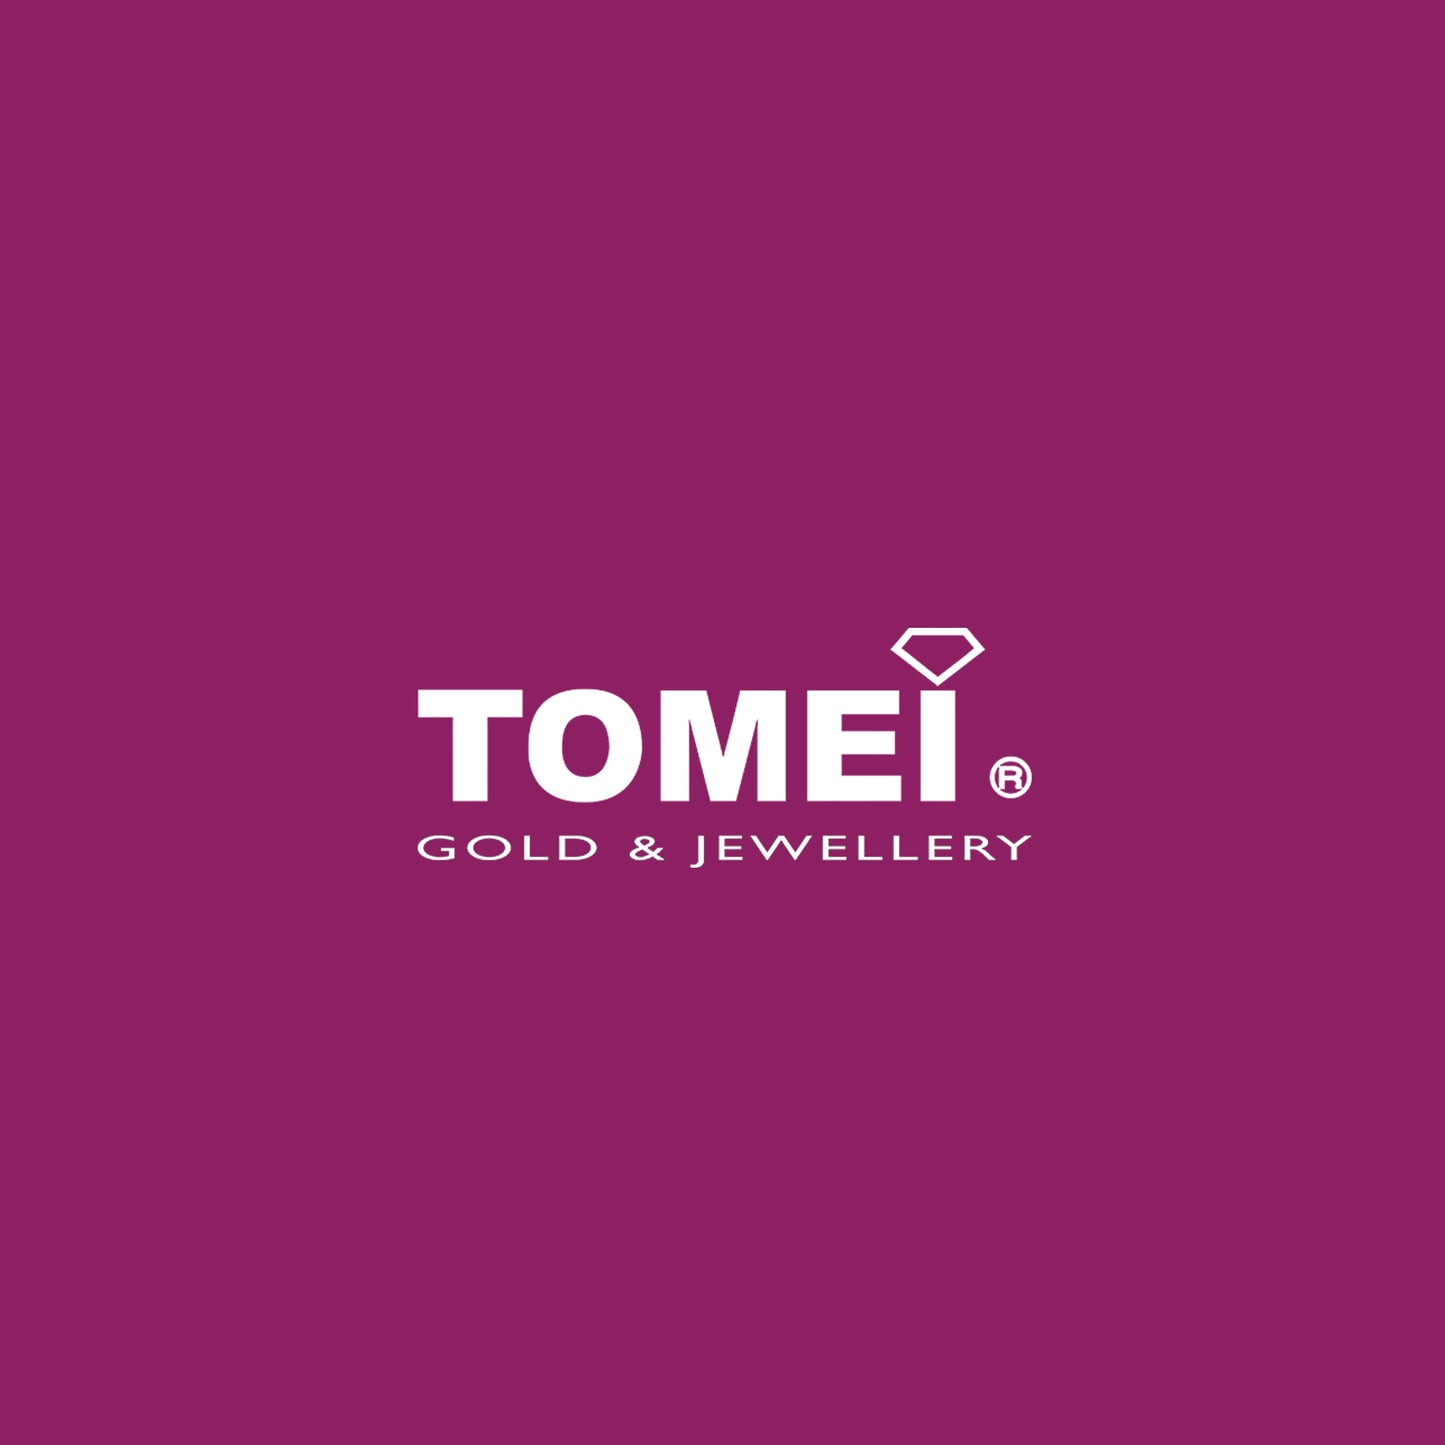 TOMEI Energetic Leopard Pendant, Diamond White Gold 750